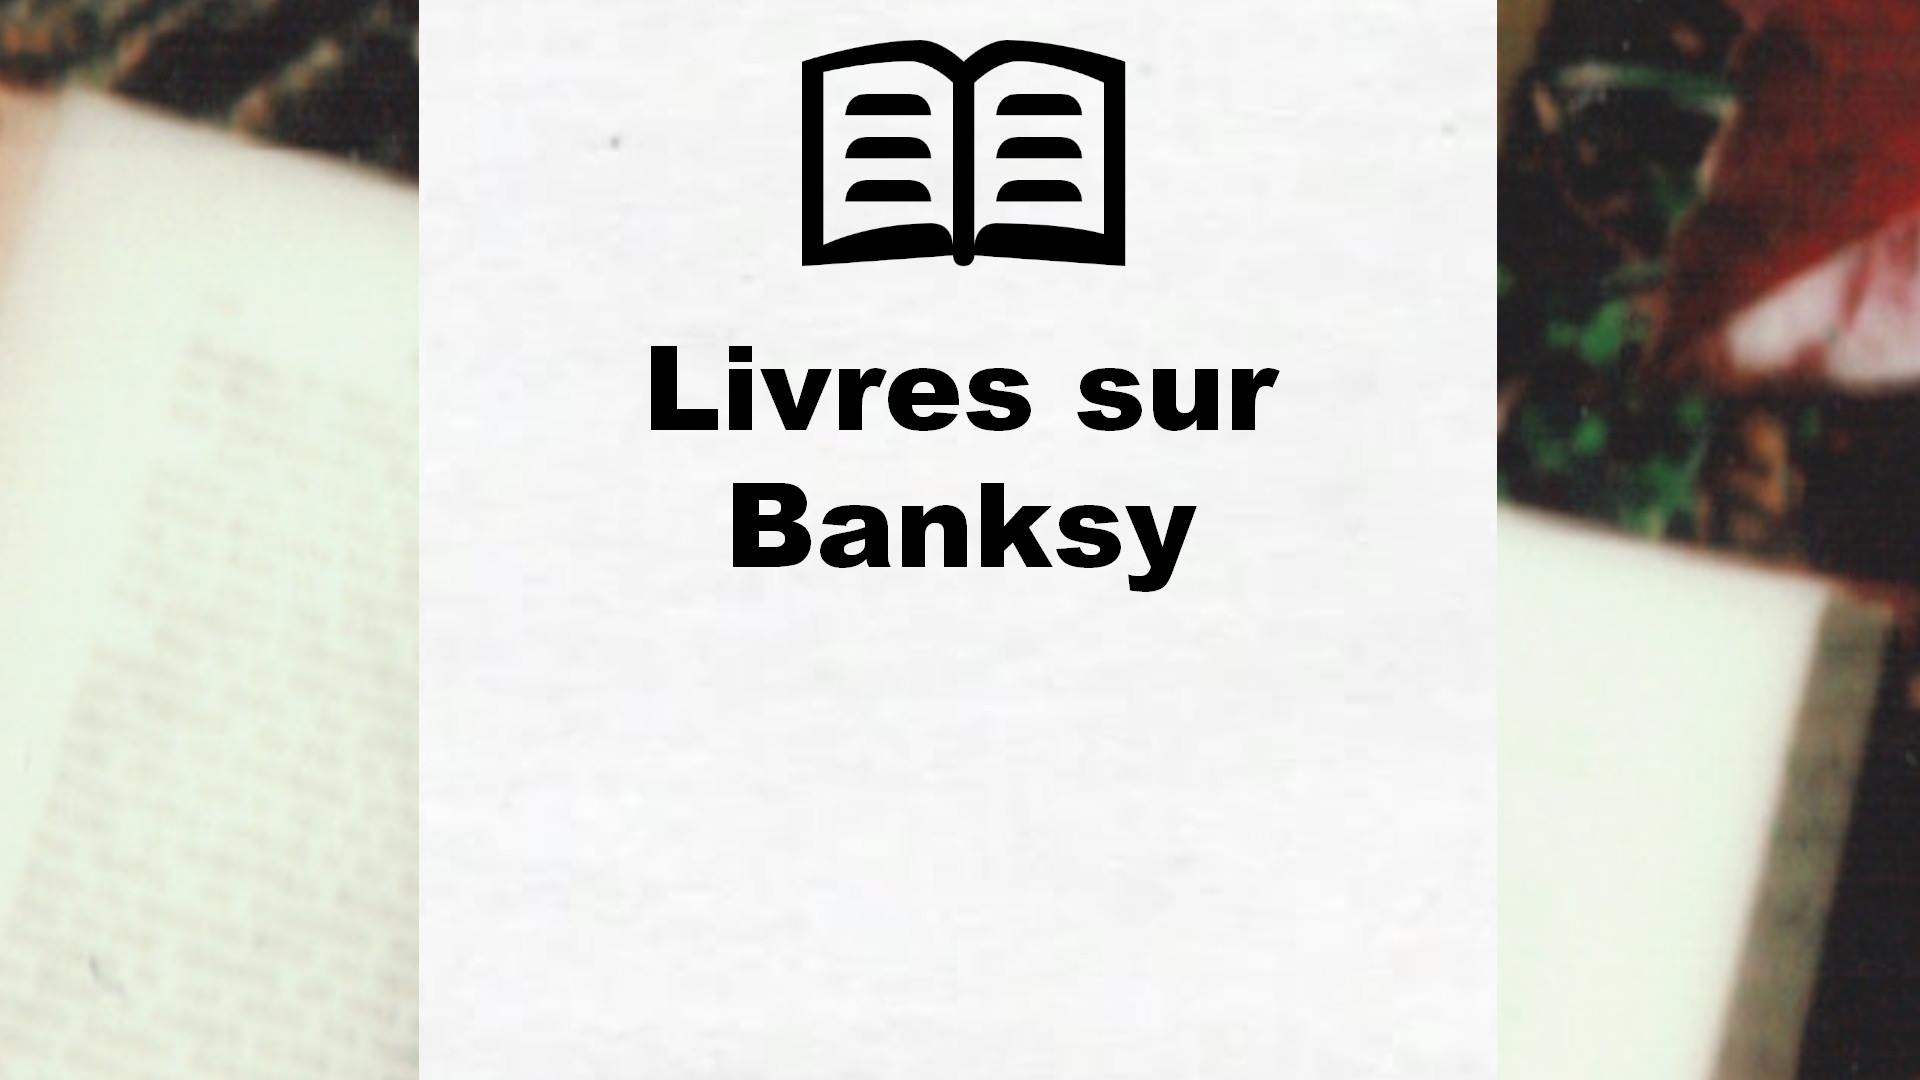 Livres sur Banksy